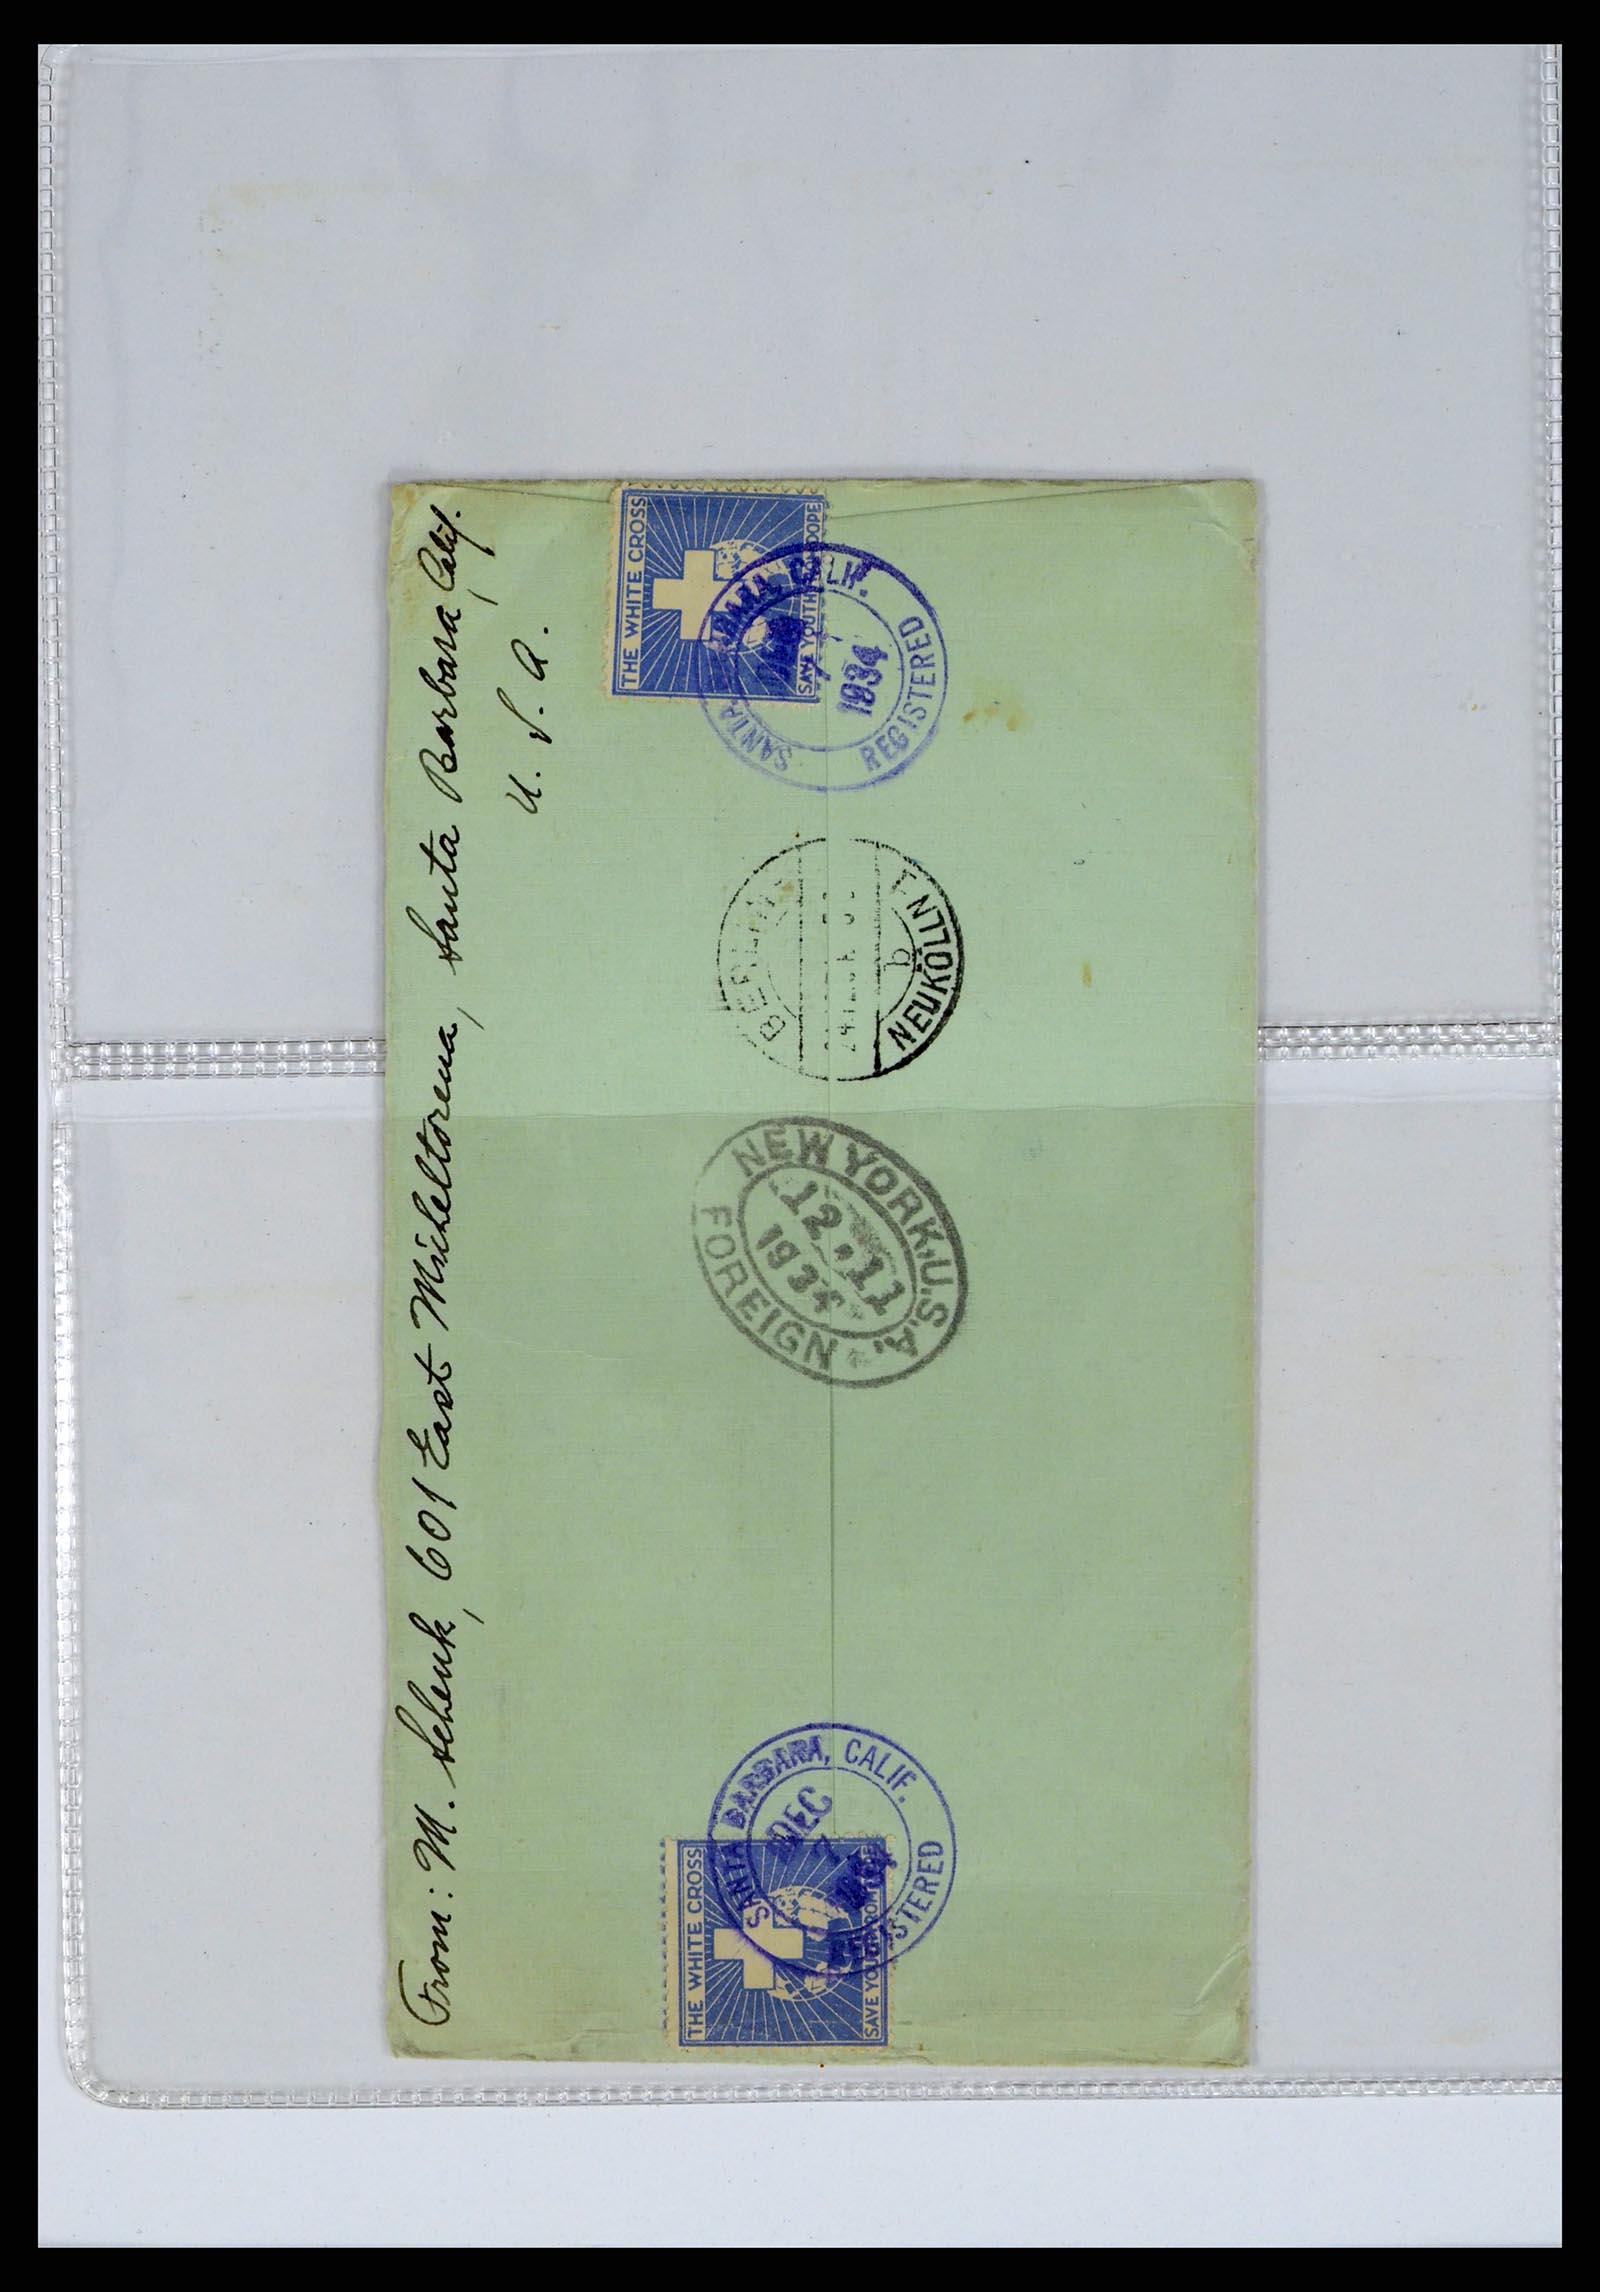 37668 221 - Stamp collection 37668 USA Christmas seals on cover 1908-2009.